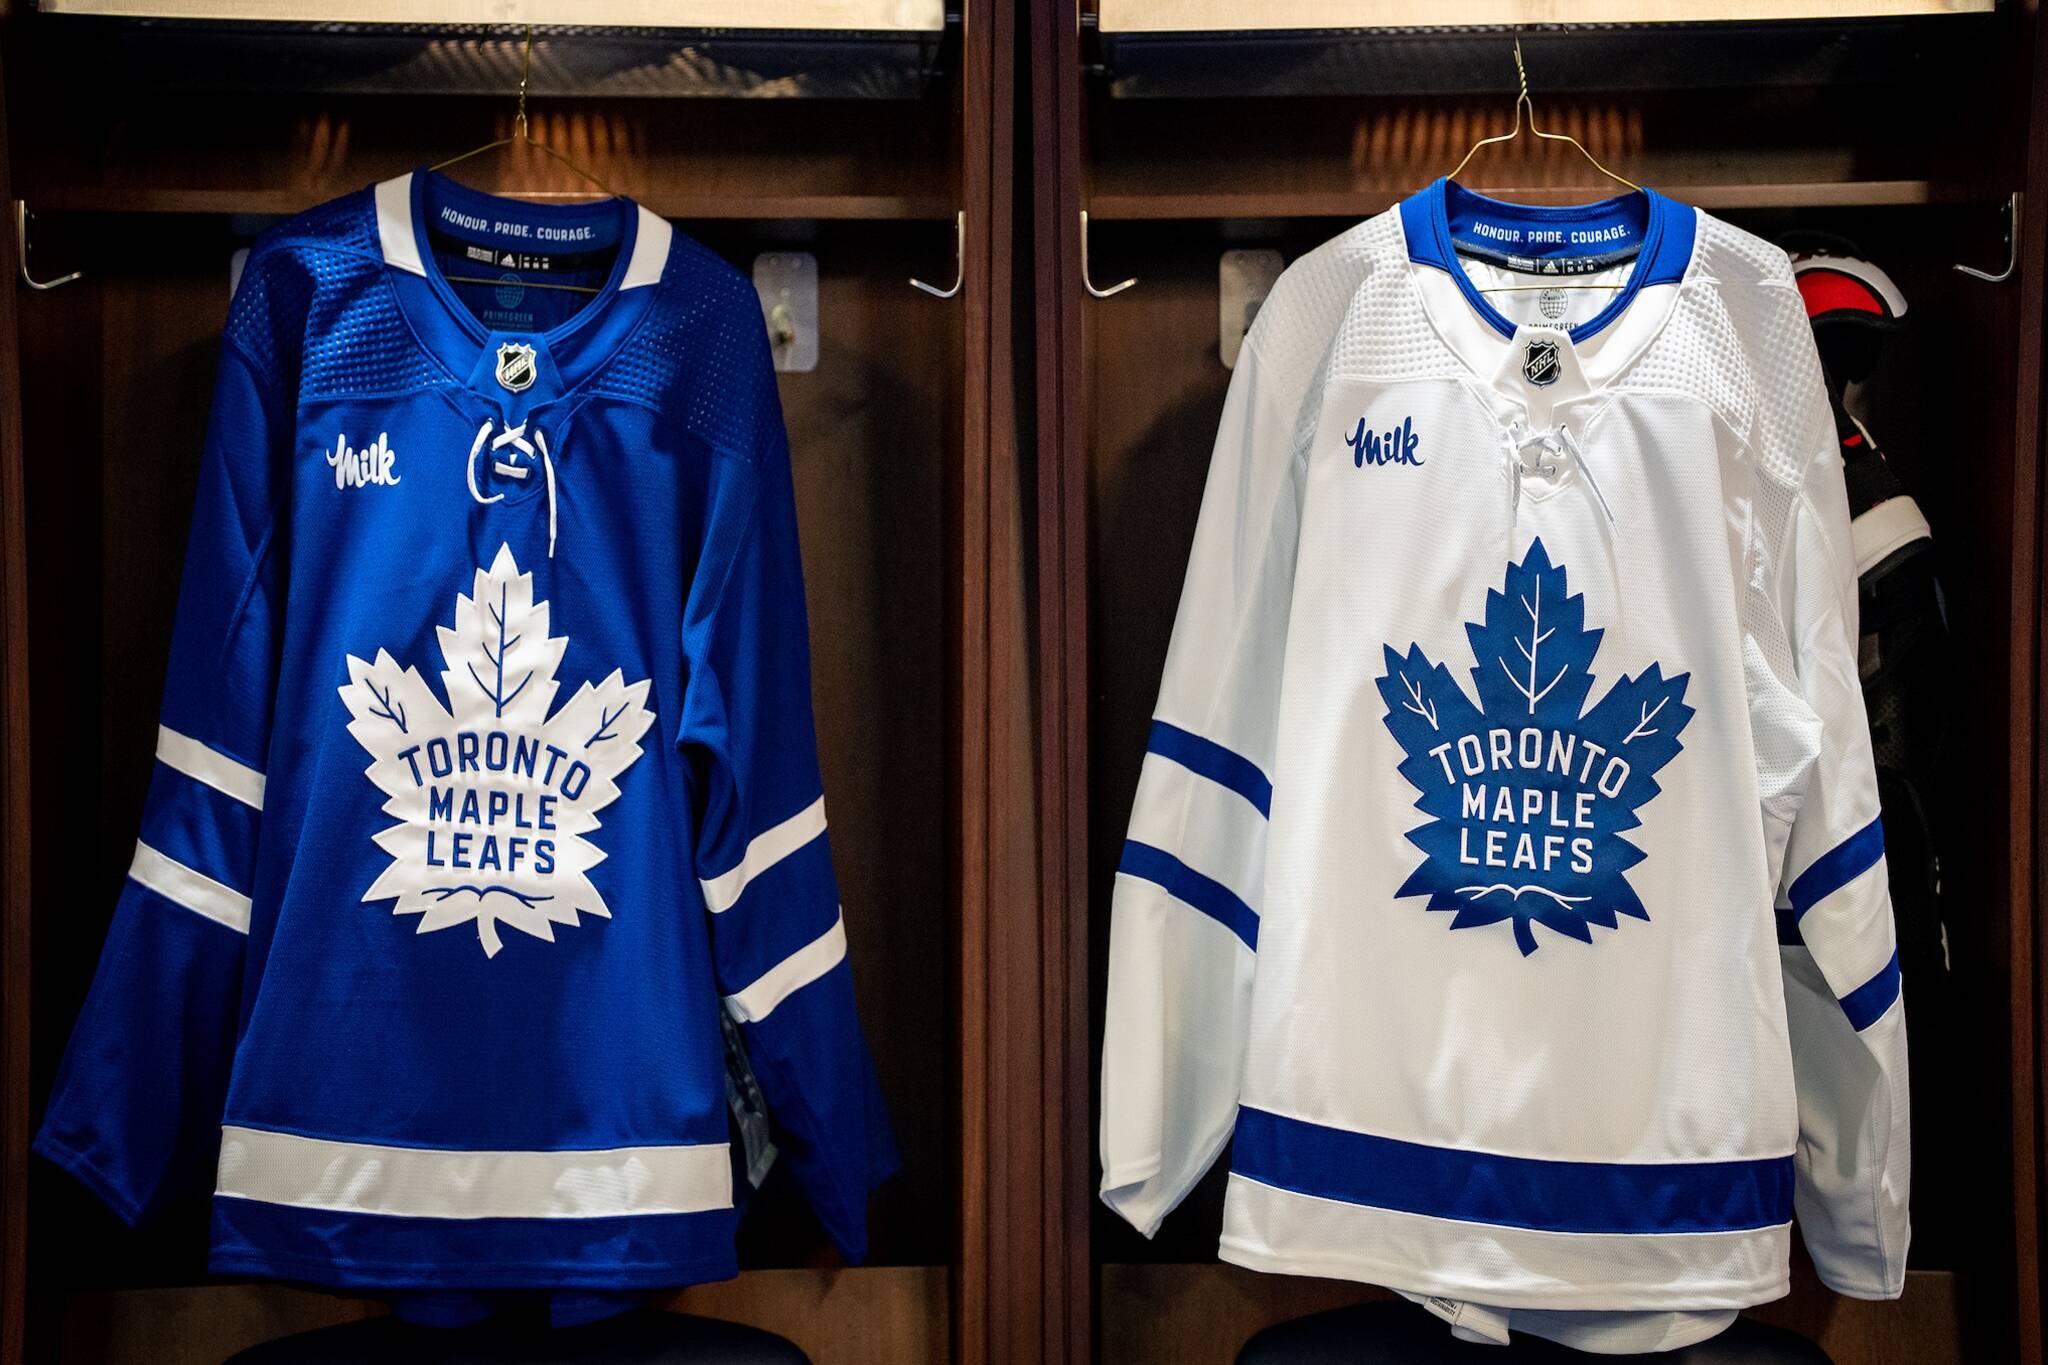 Toronto Maple Leafs announce jersey sponsor: Milk - BVM Sports